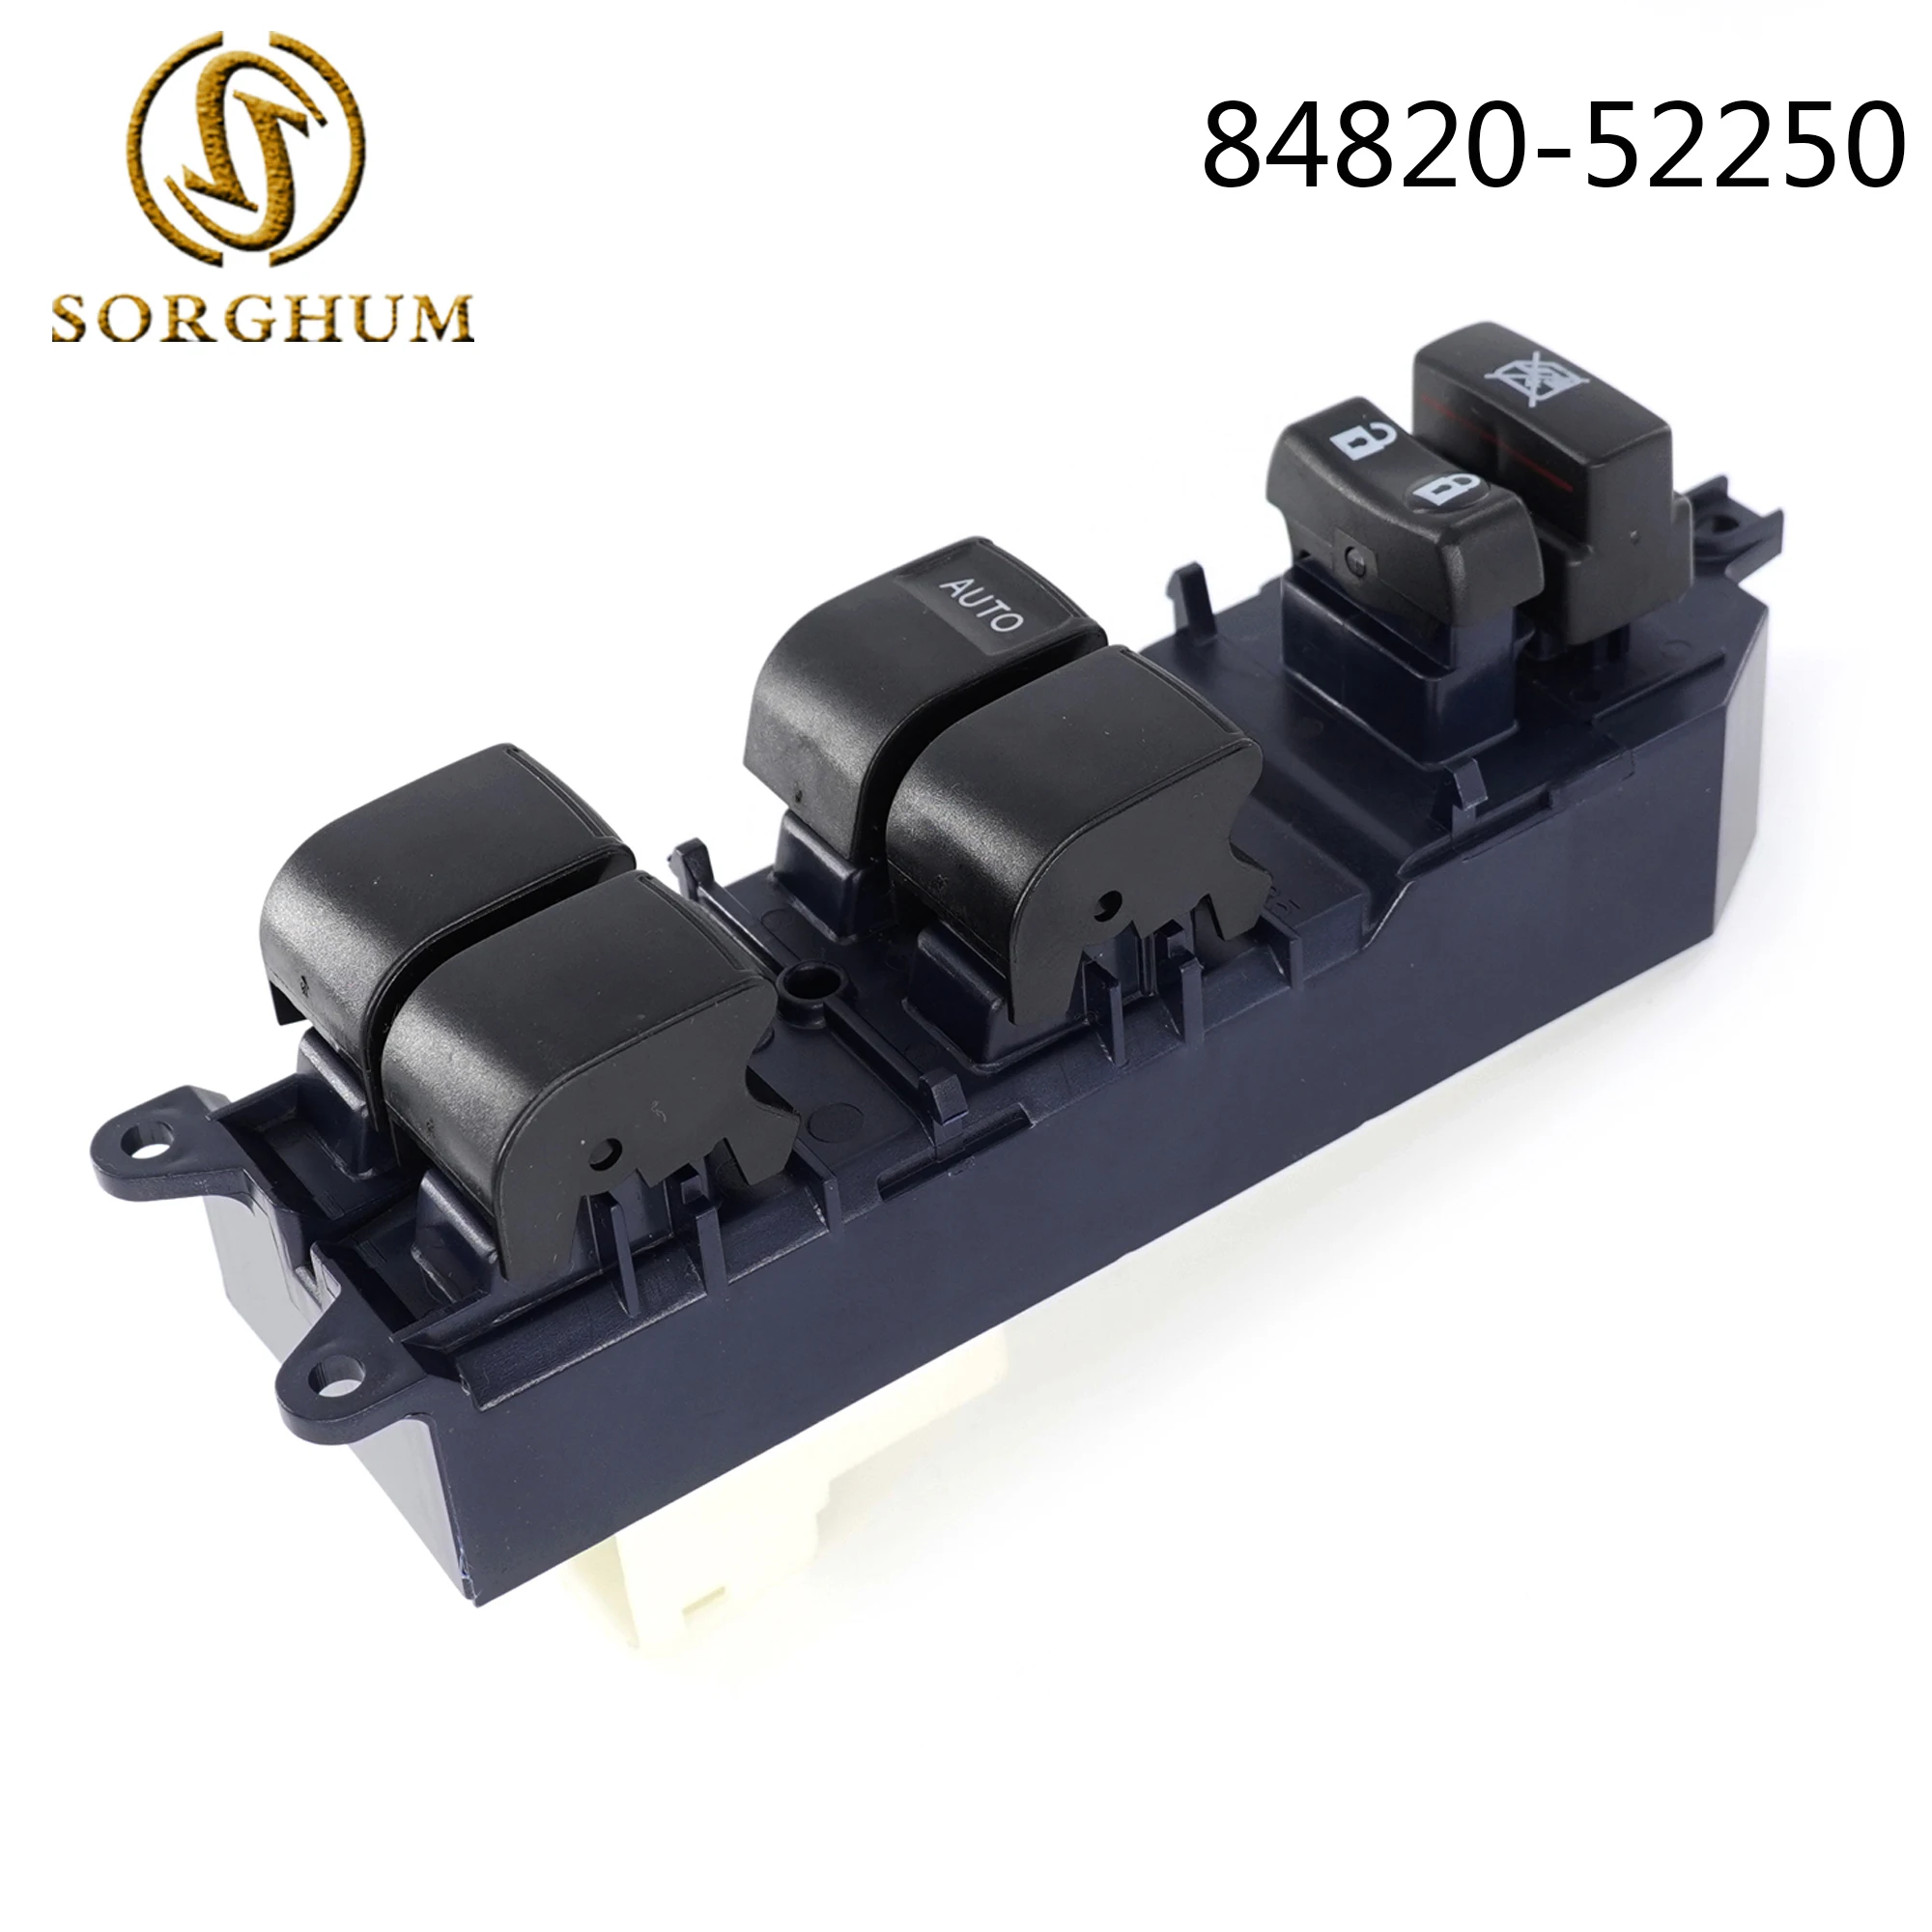 Sorghum Car 84820-52250 84820-06100 Power Window Master Control Switch Regulator For Toyota Camry Corolla Vios RAV4 2006-2018